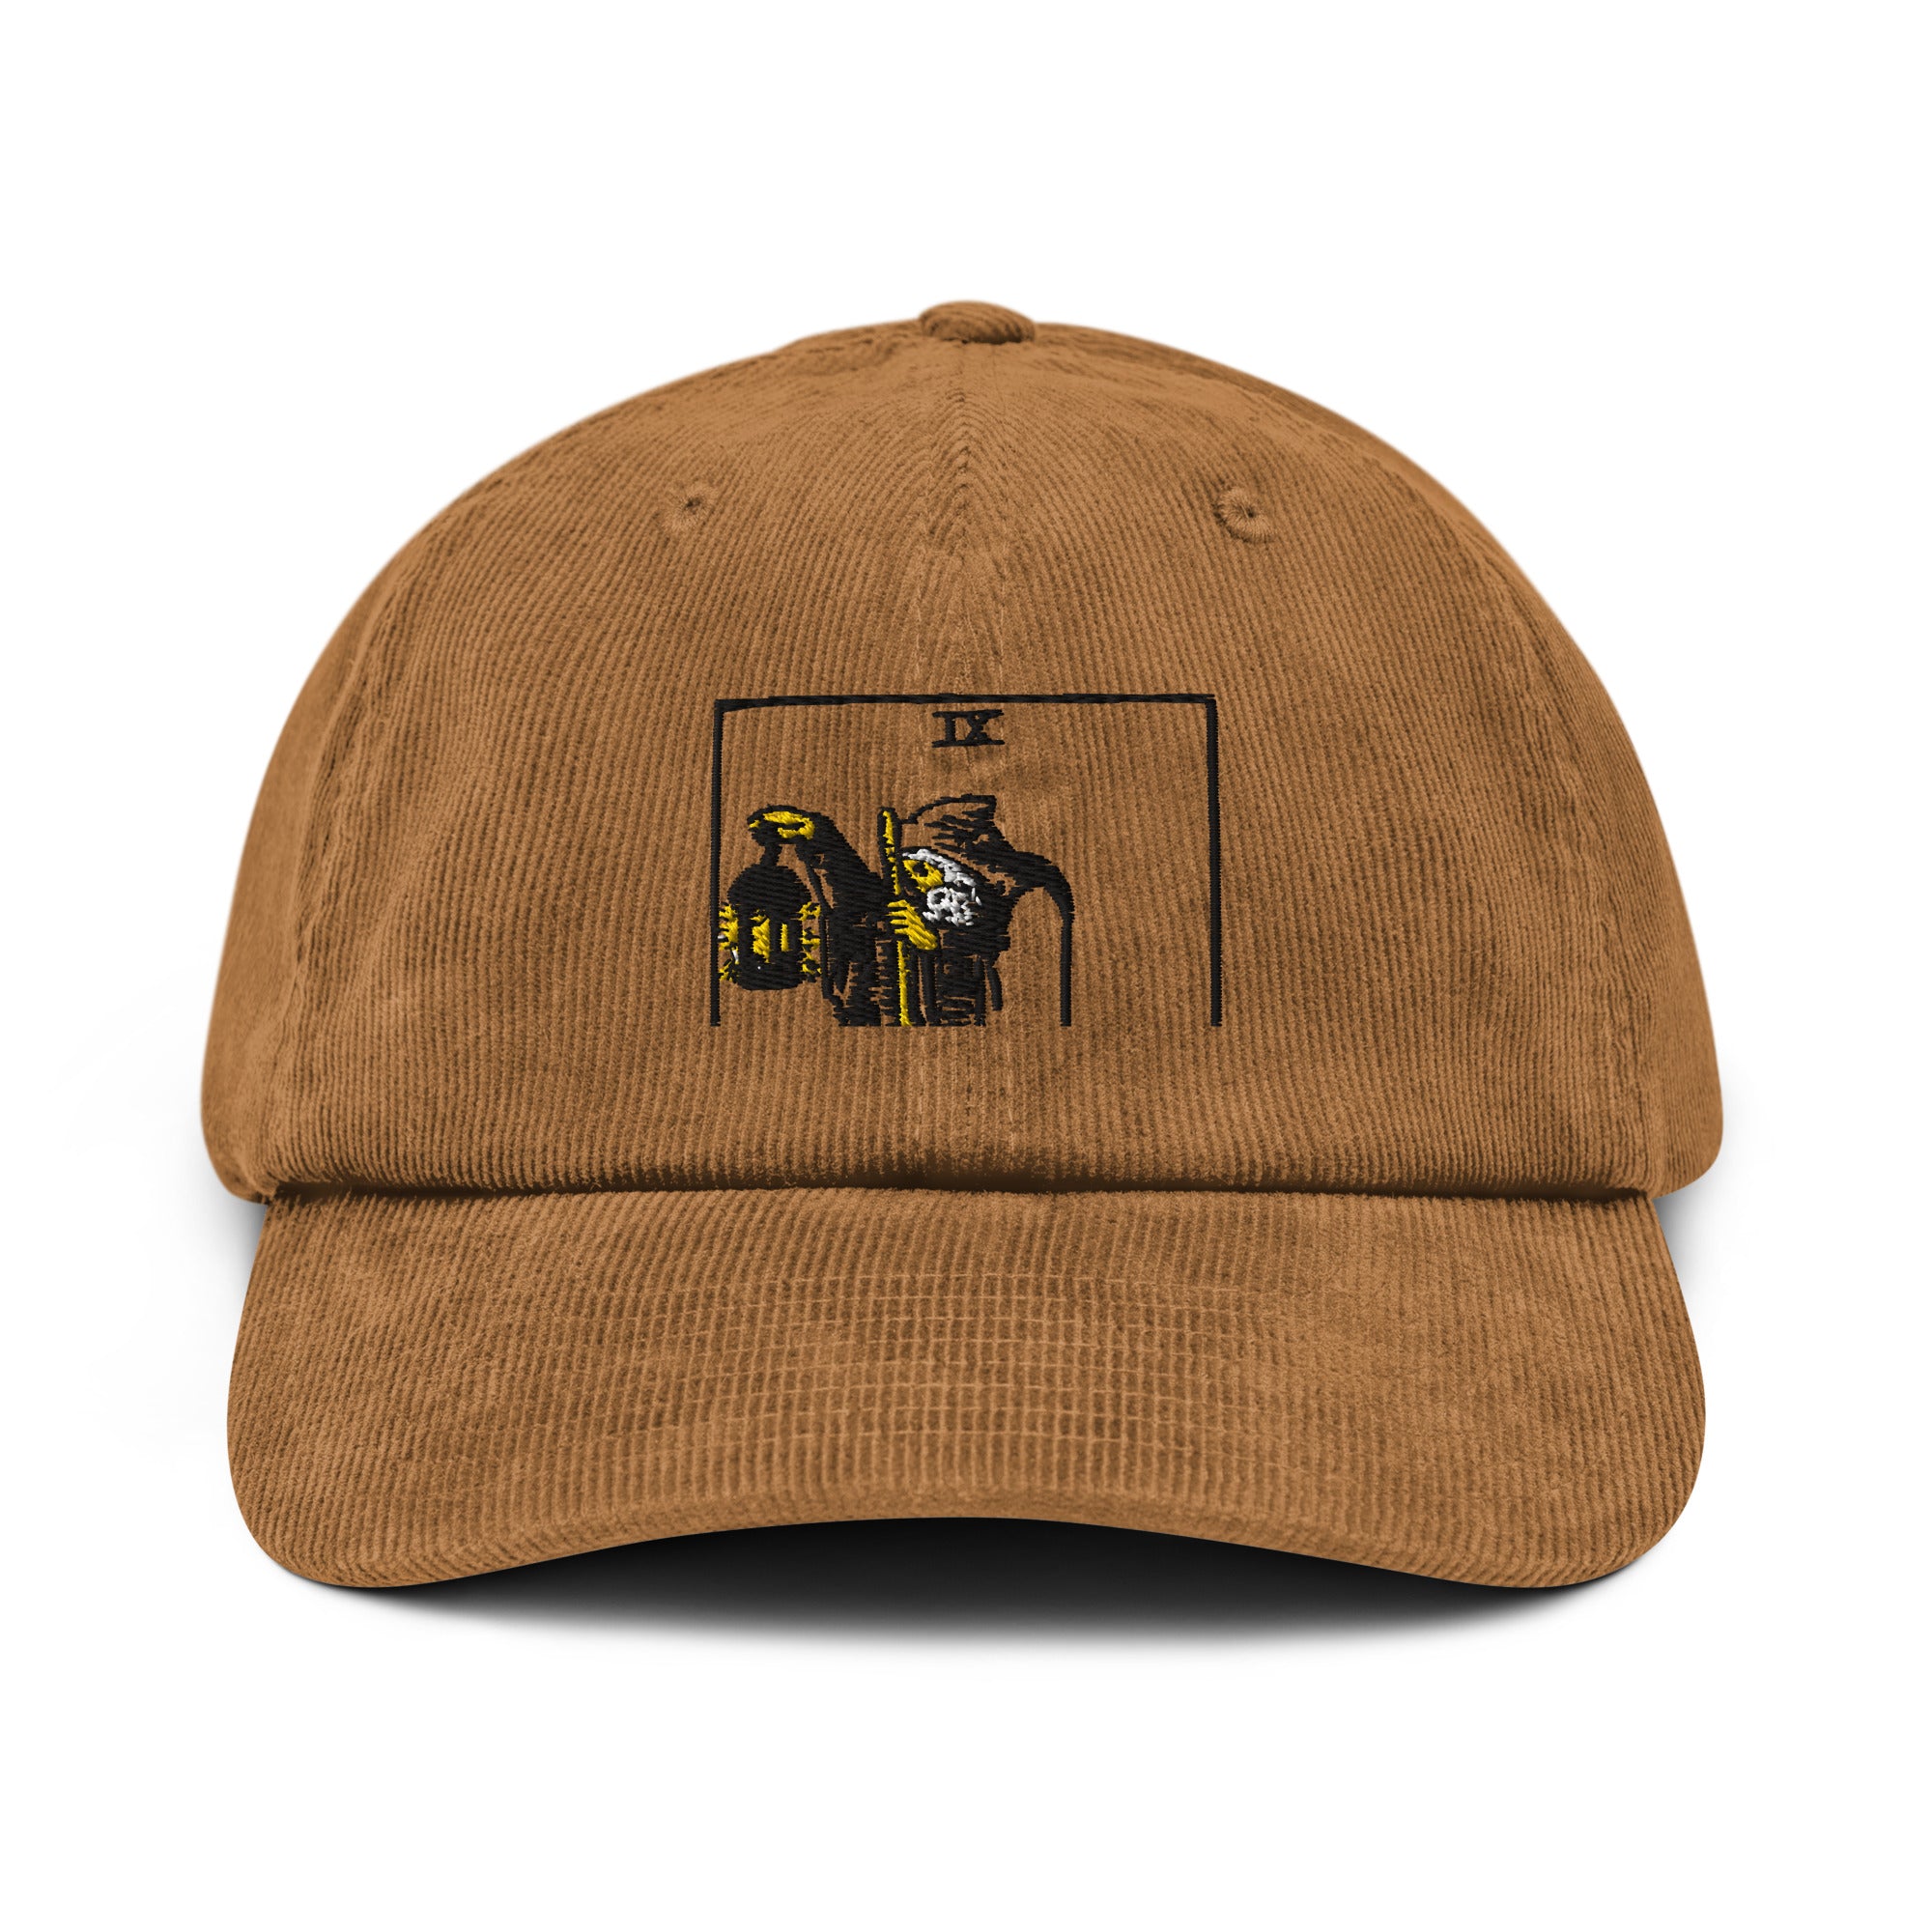 The Hermit Tarot Corduroy hat